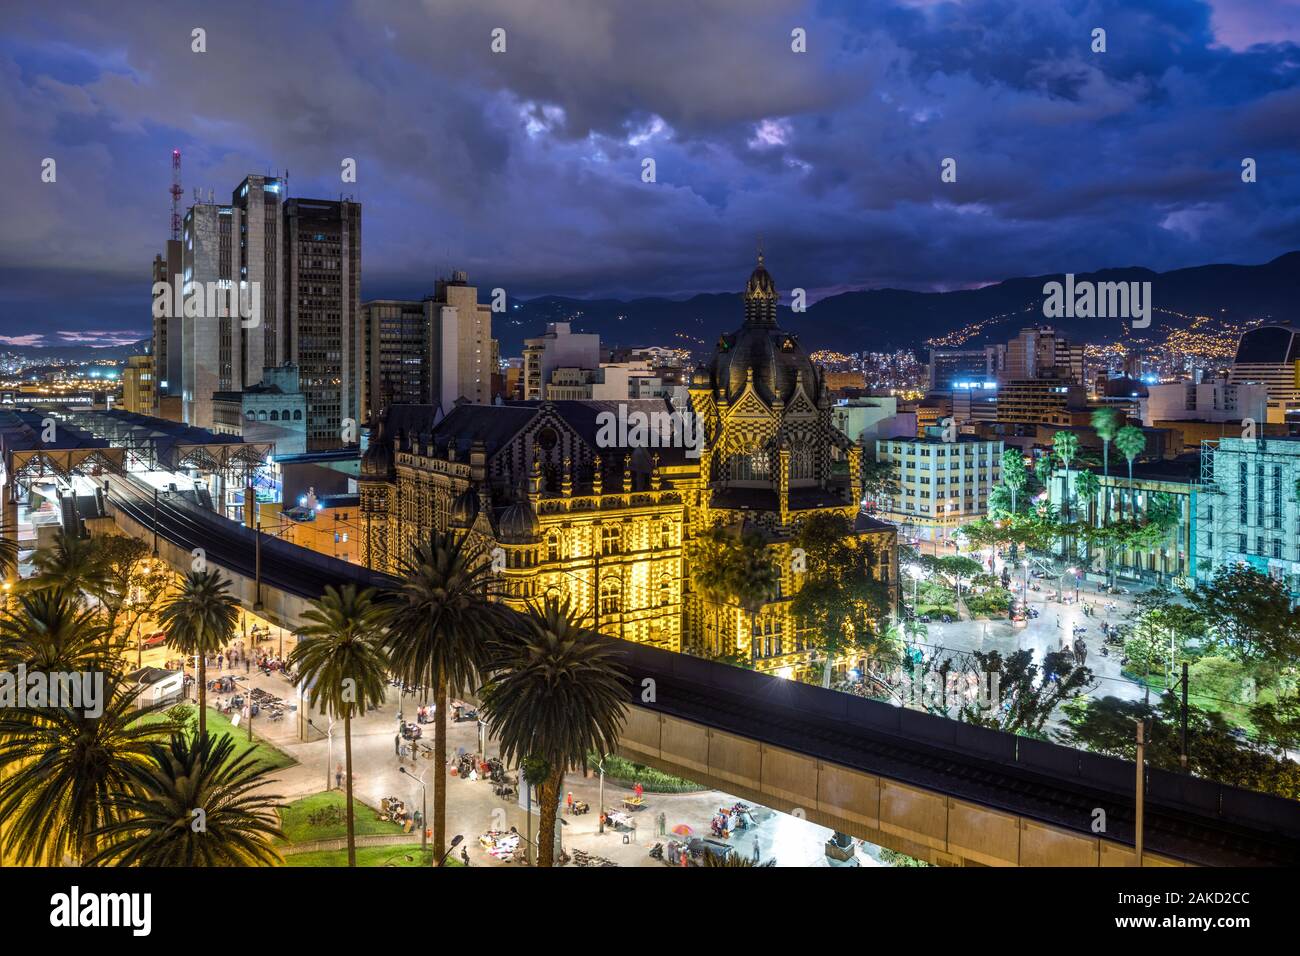 Plaza Botero Square in der Dämmerung in Medellin, Kolumbien. Stockfoto